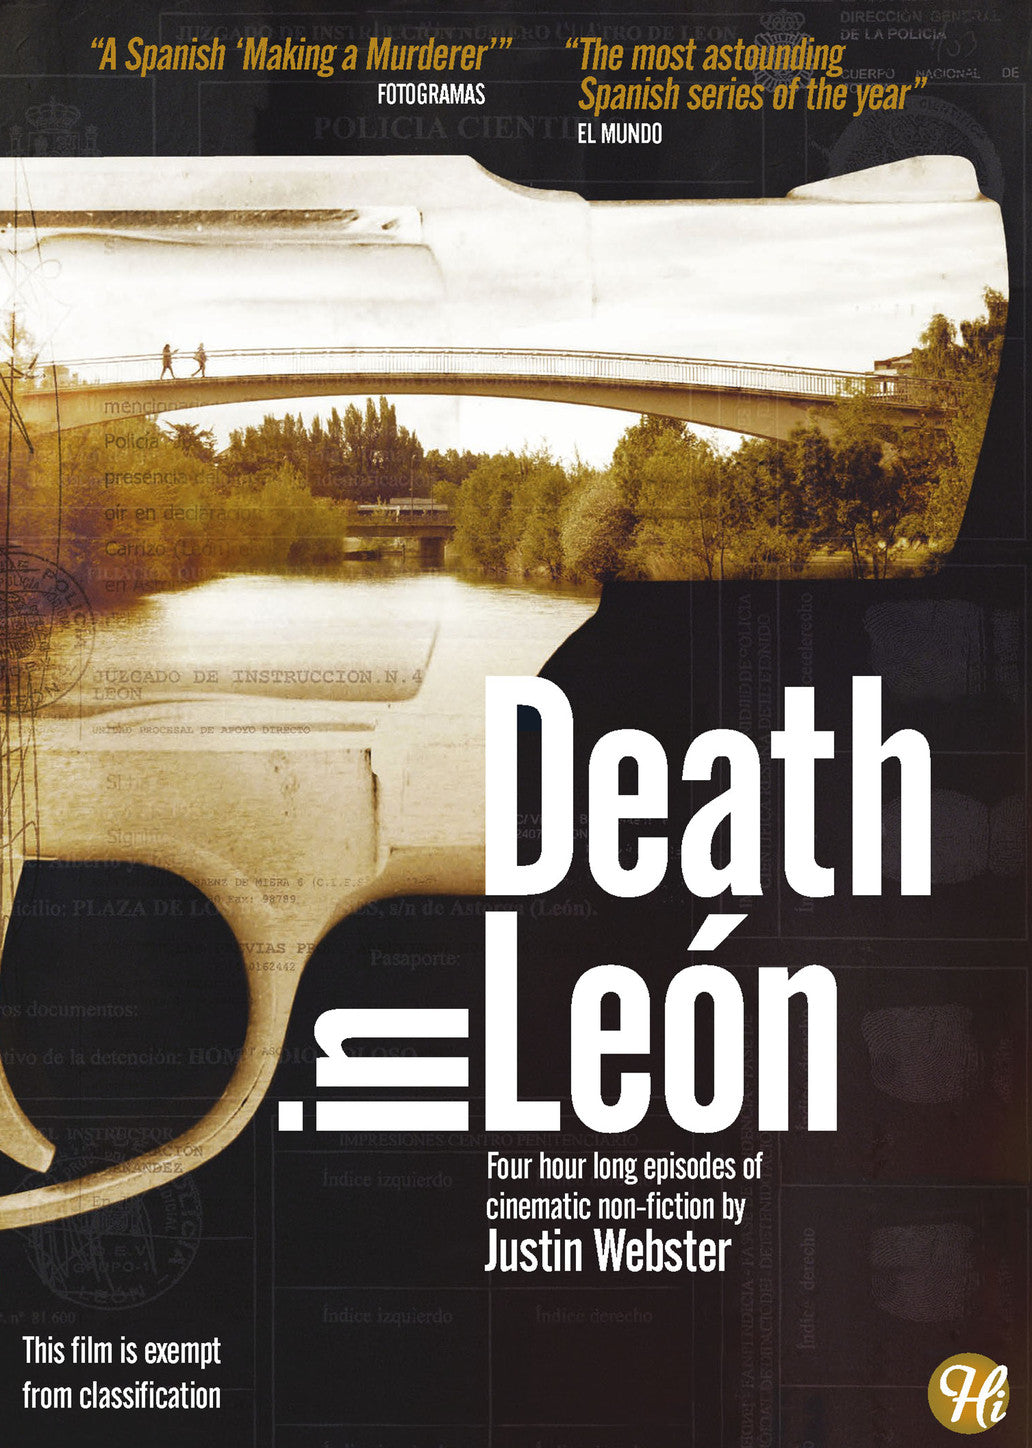 DEATH IN LEON